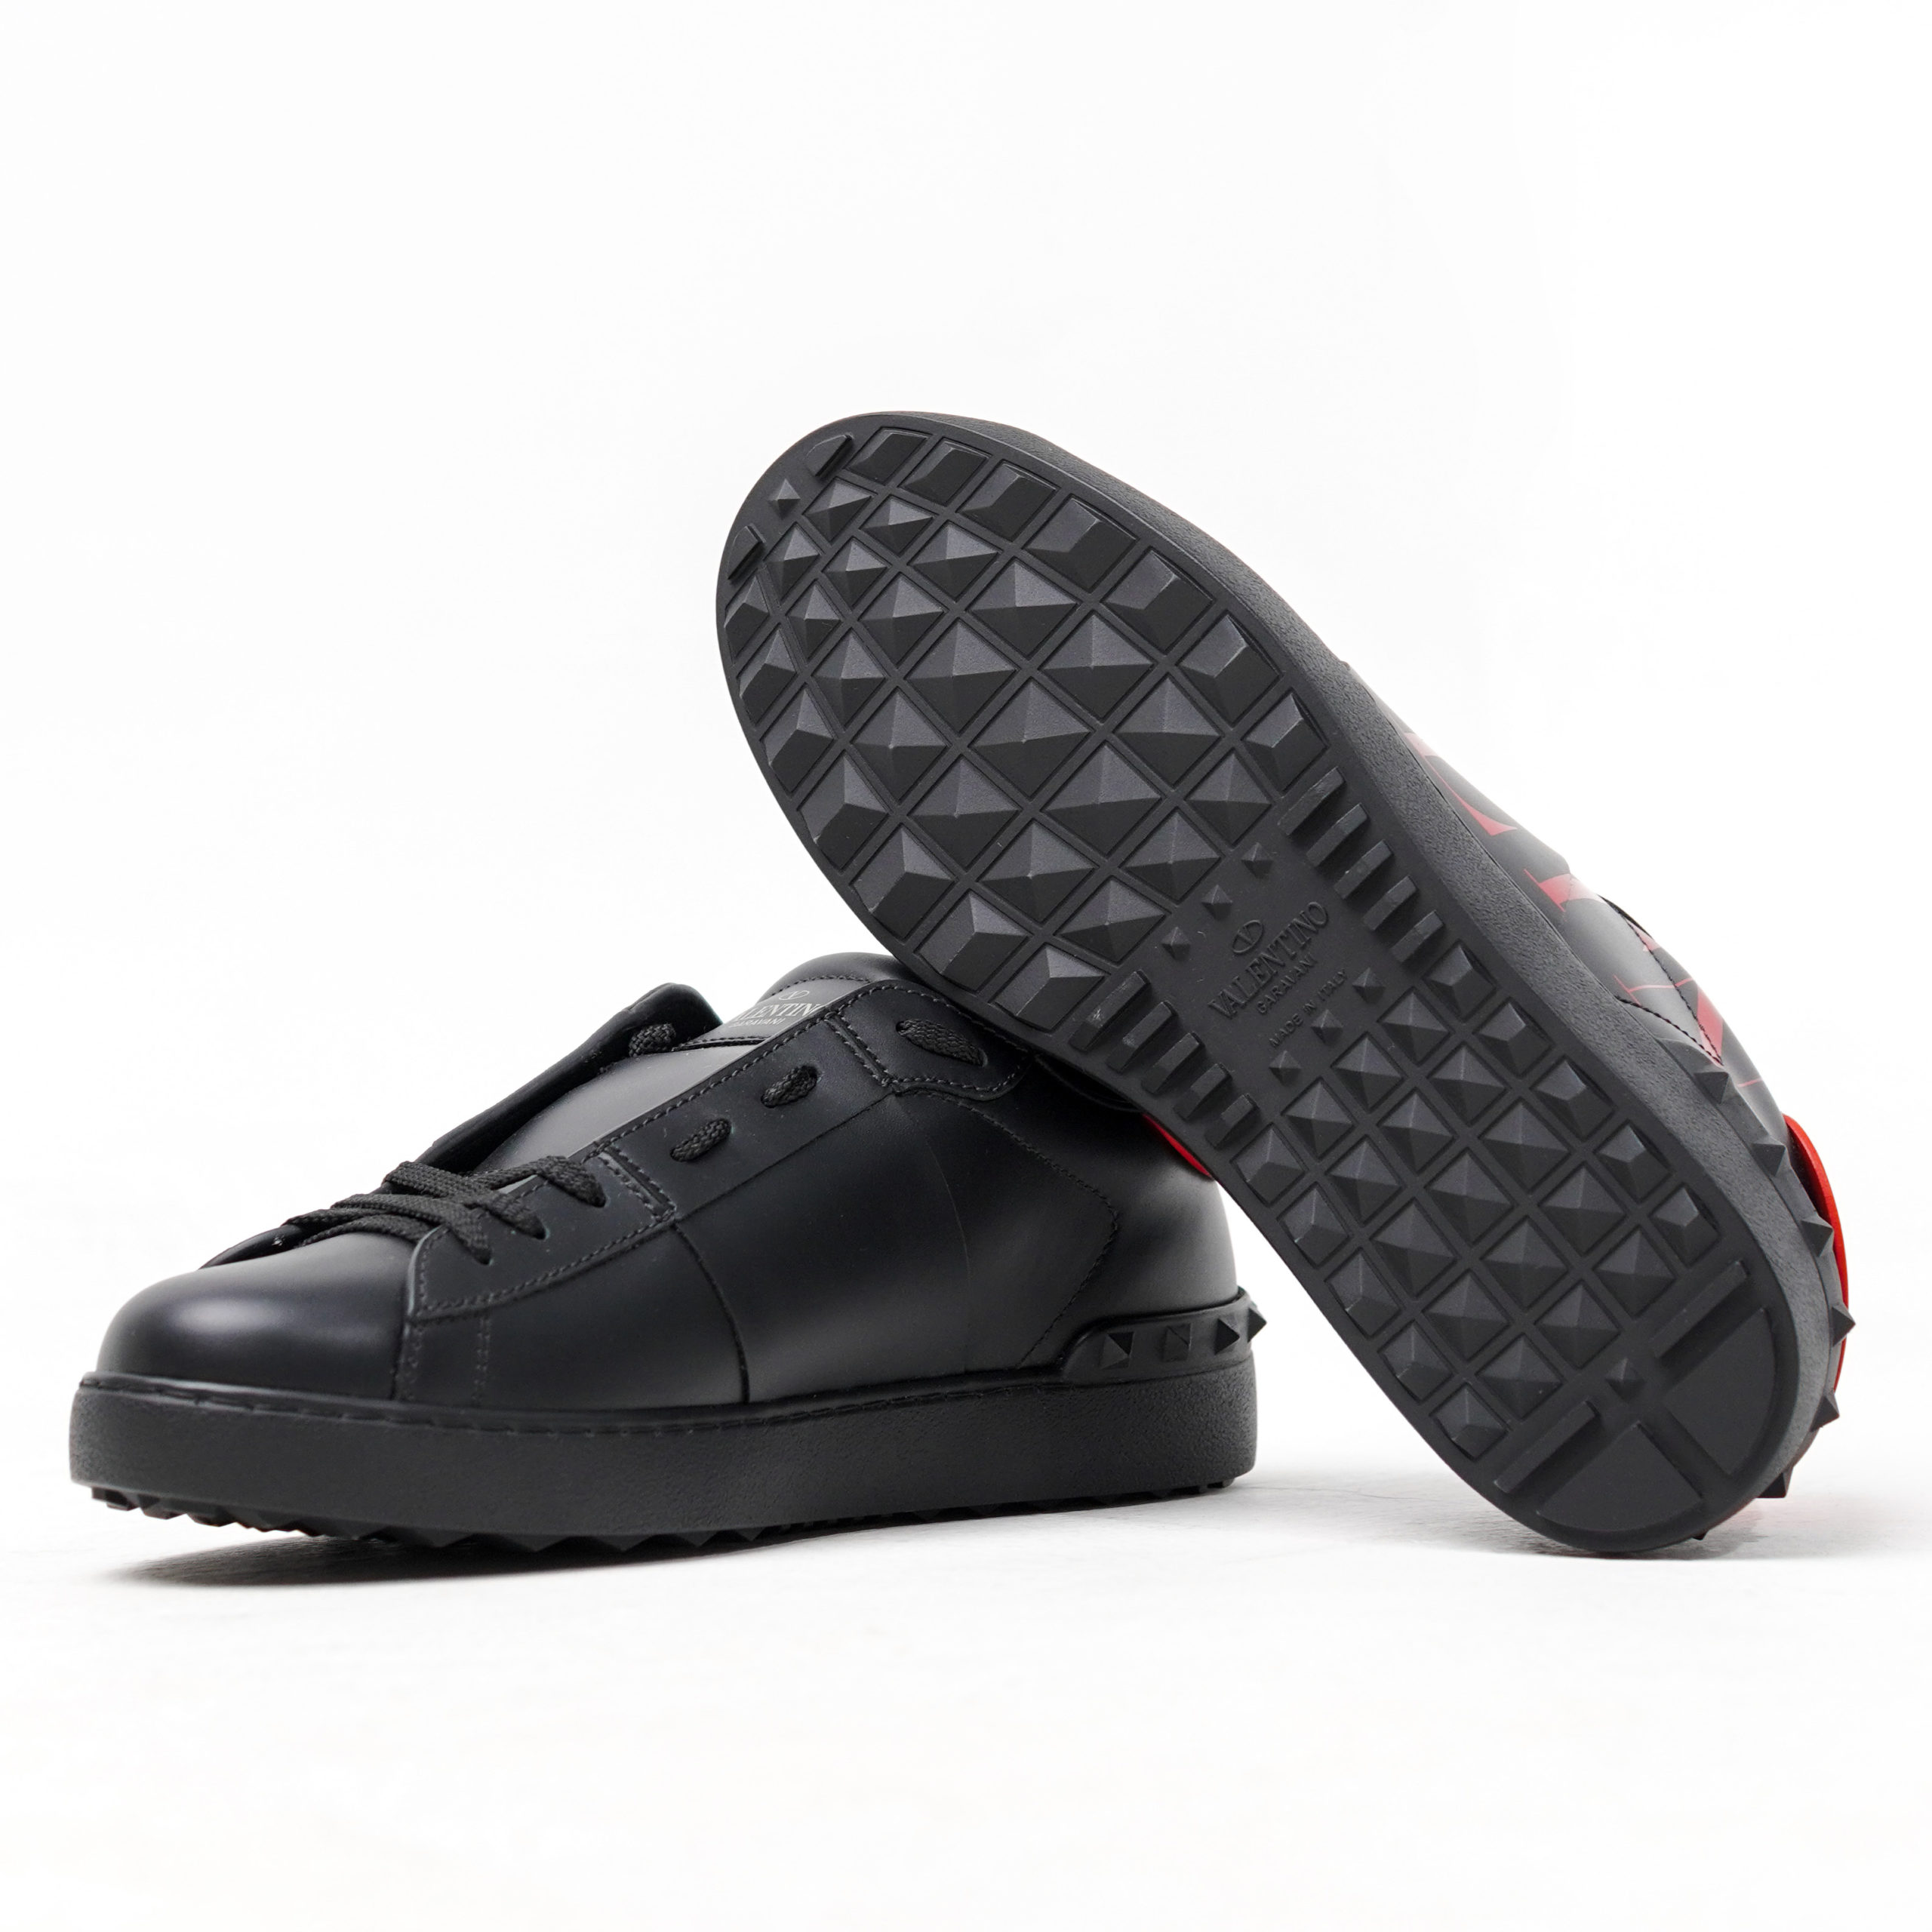 Sepatu LV LUXEMBOURG MONOGRAM ECLIPSE BLACK SNEAKER 100% AUTHENTIC -  HYPESNEAKER.ID